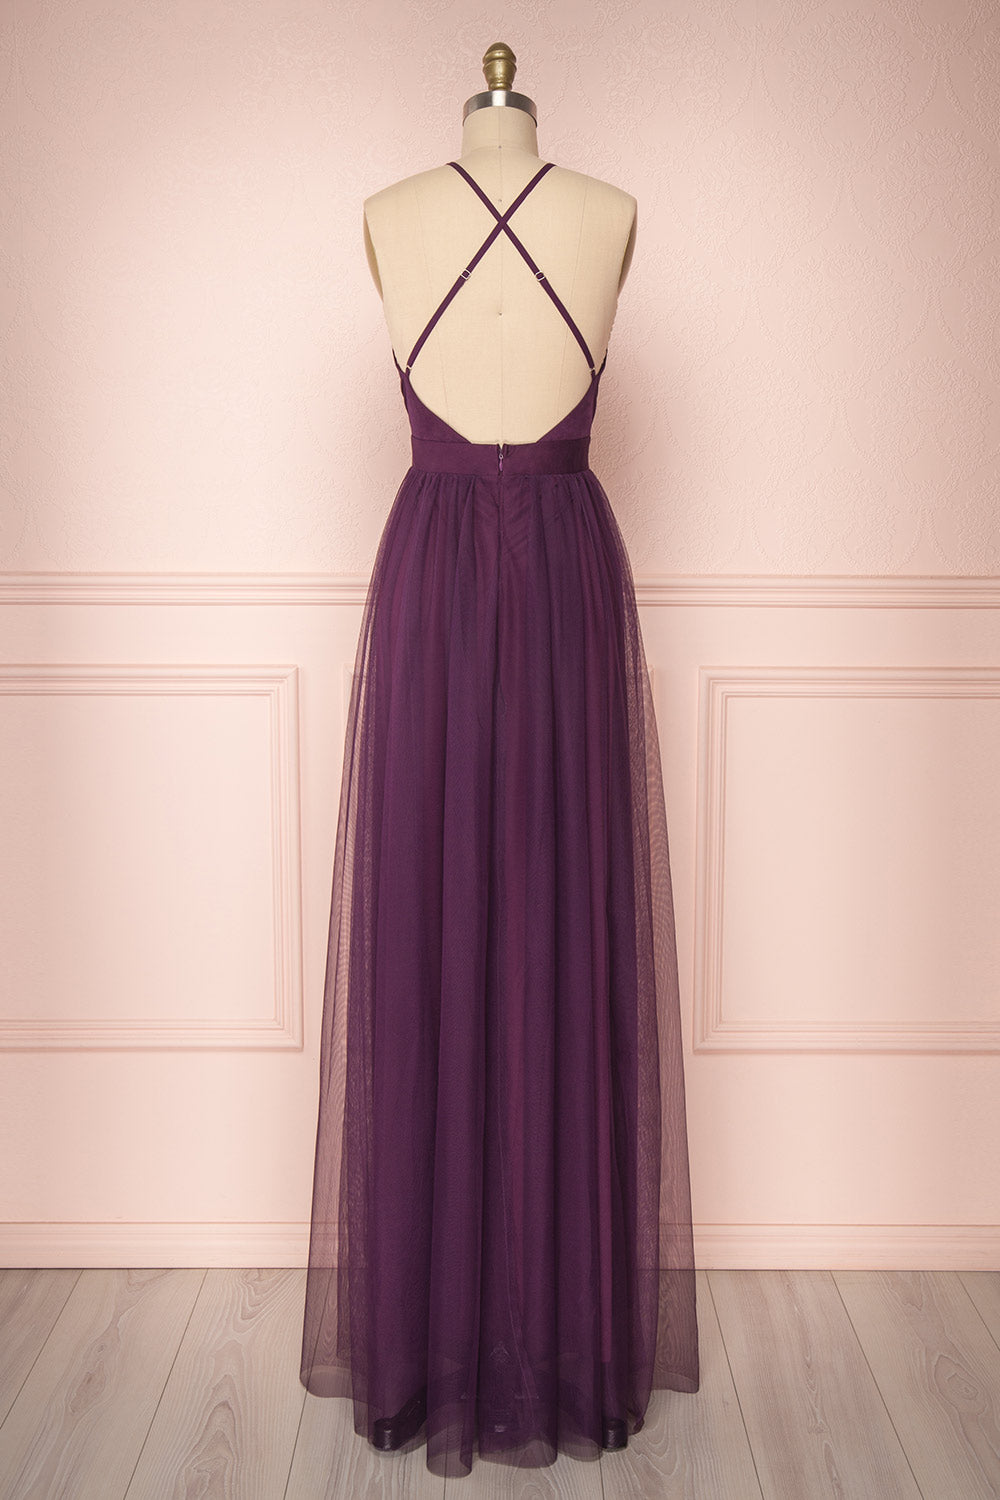 Aliki Eggplant Purple Mesh Maxi Dress | Boutique 1861 5